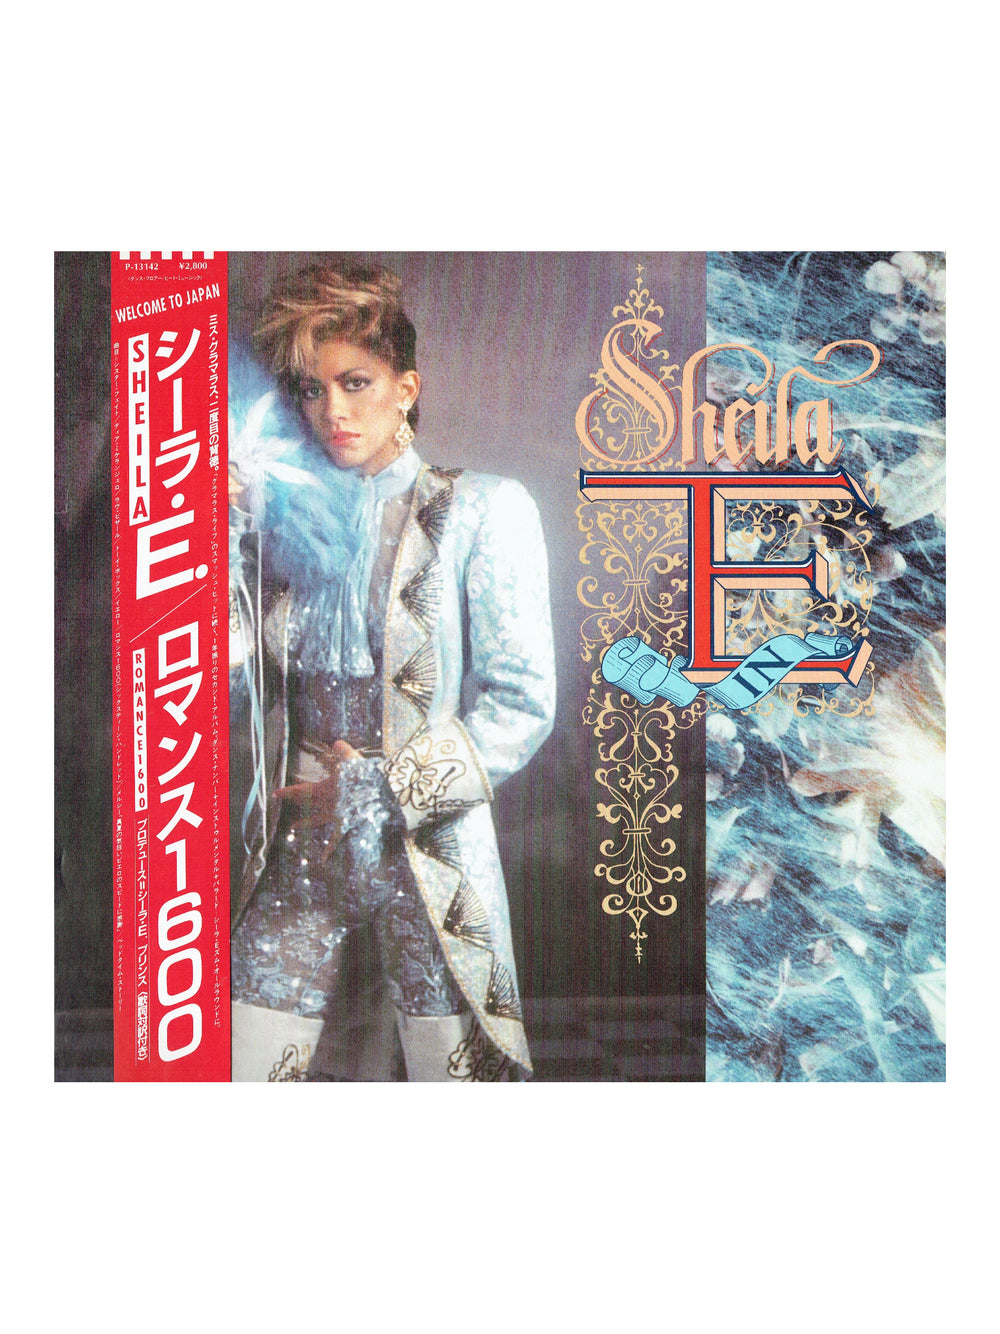 Prince – Sheila E In Romance 1600 Japan Vinyl Album With OBI Strip & Insert Prince